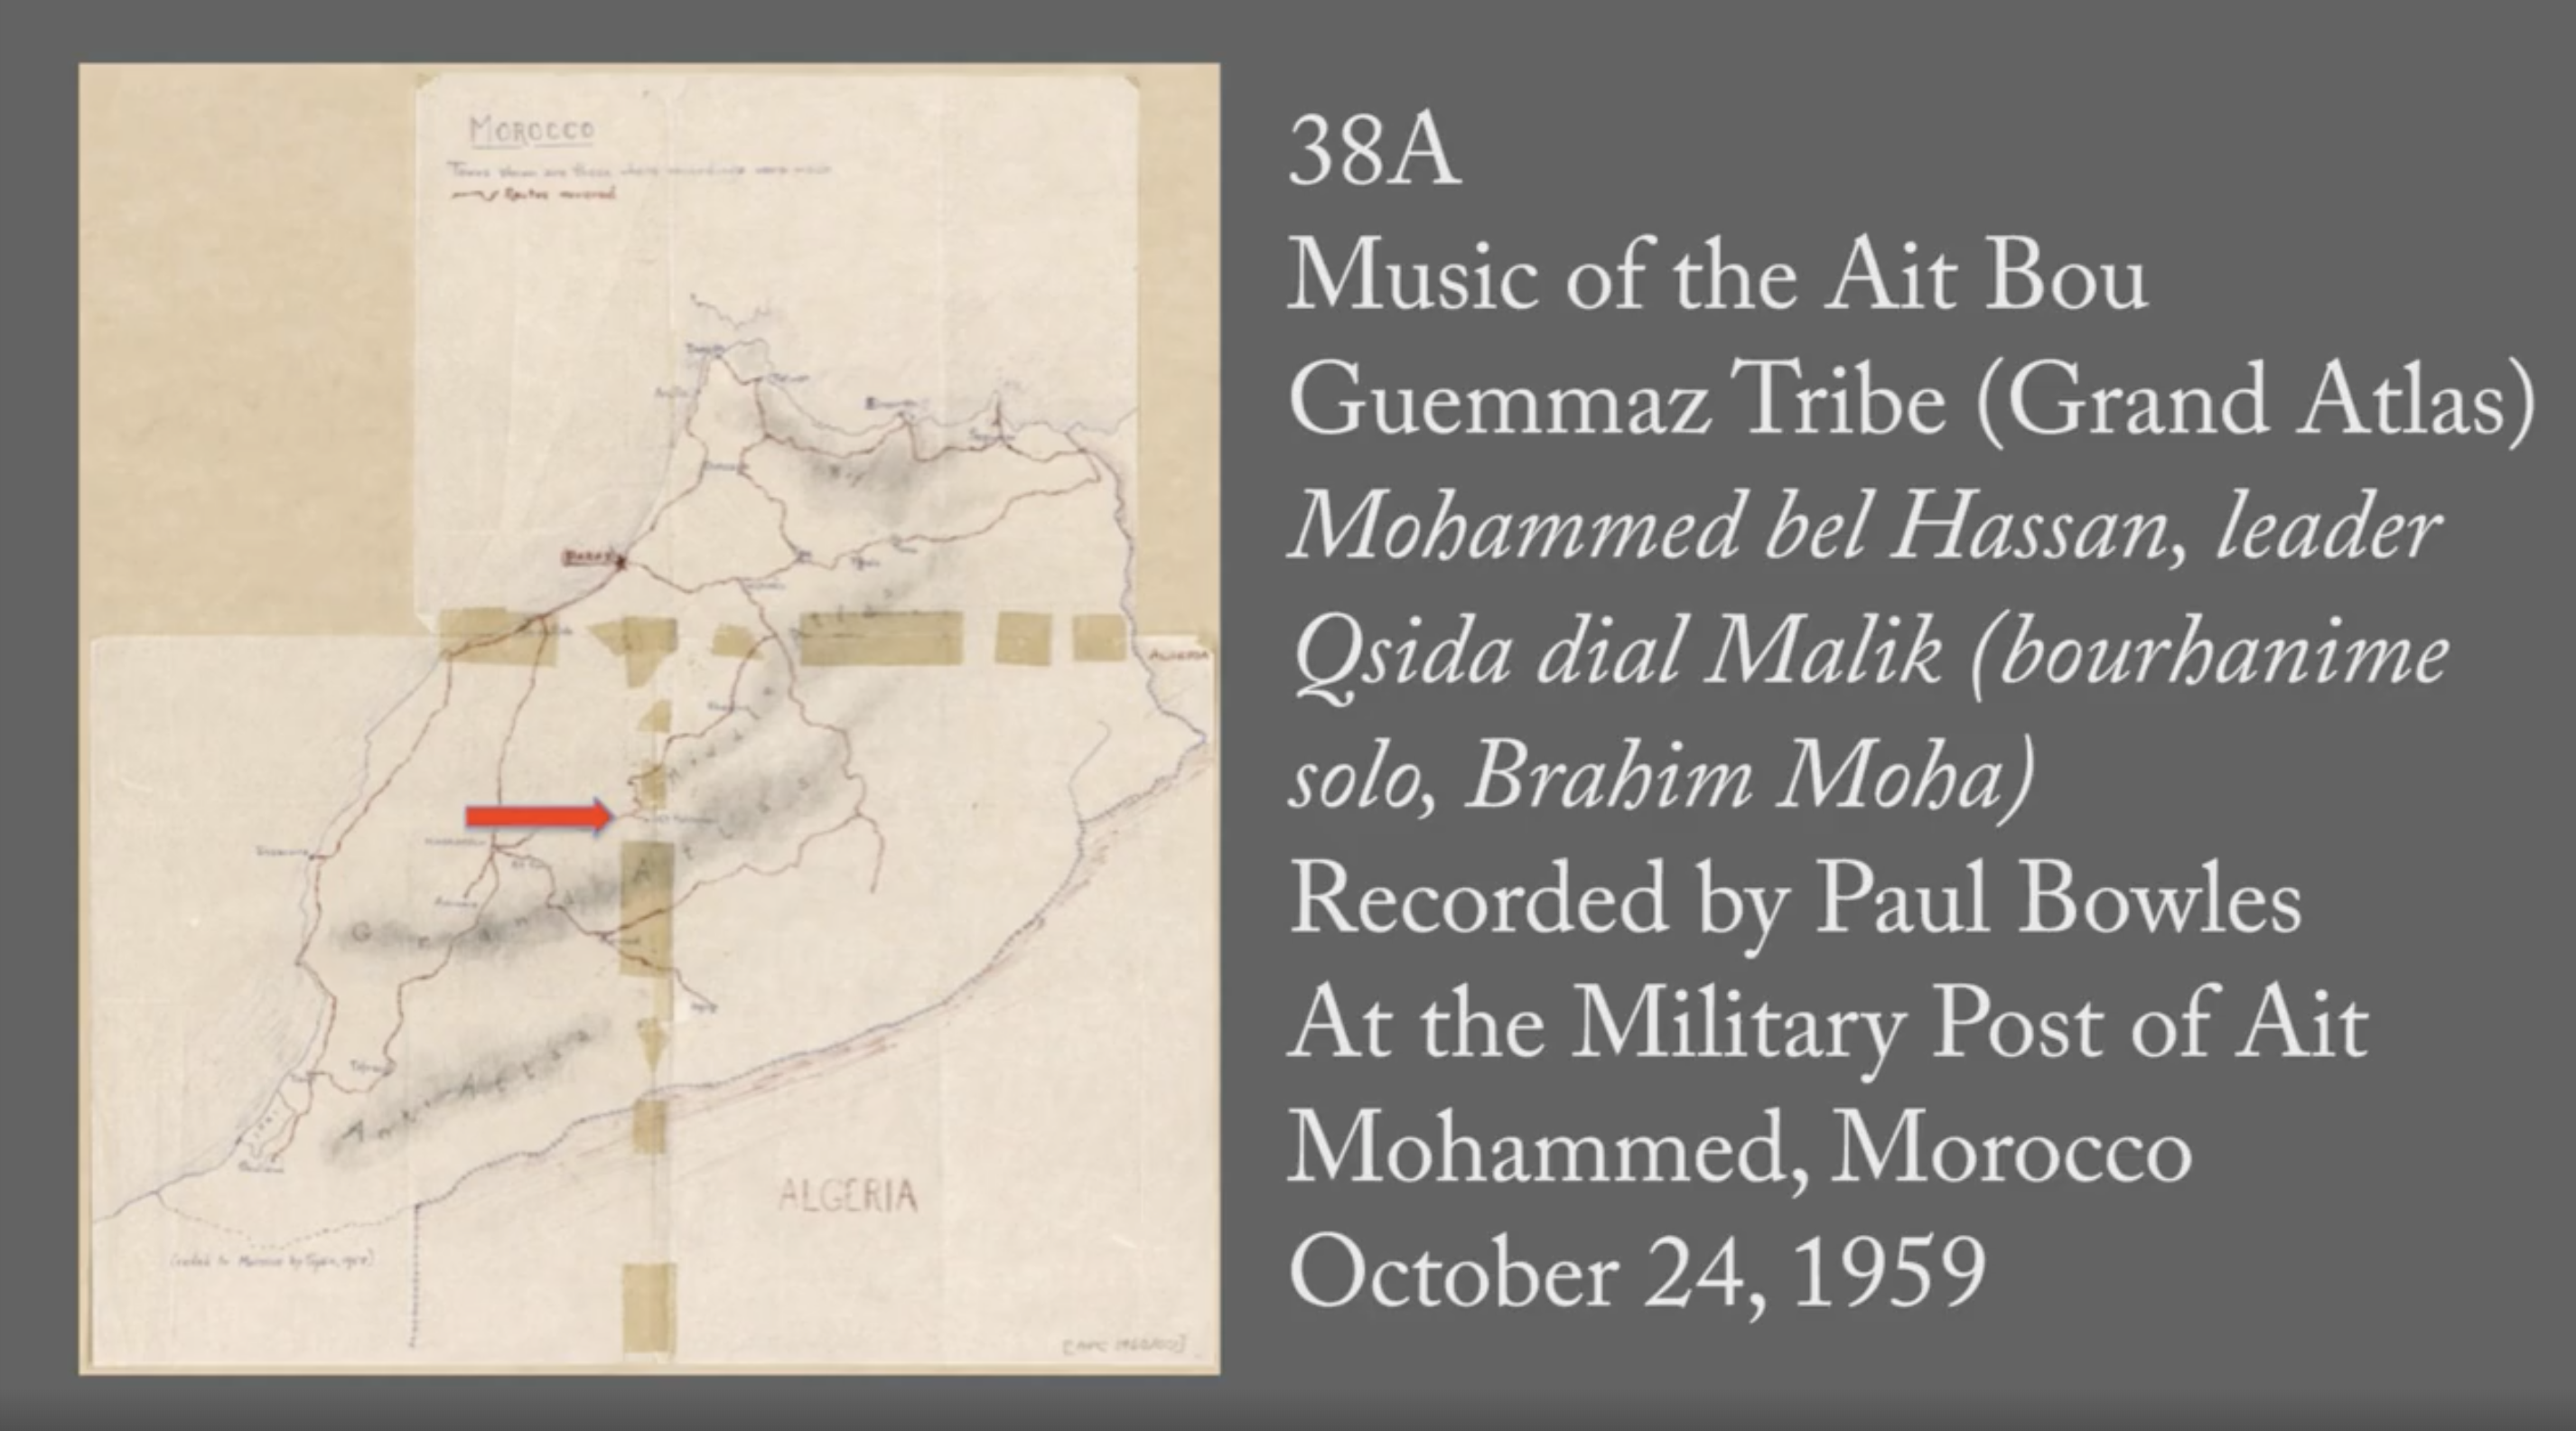 38A: "Qsida dial Malik" (Music of the Ait Bou Guemmaz Tribe)